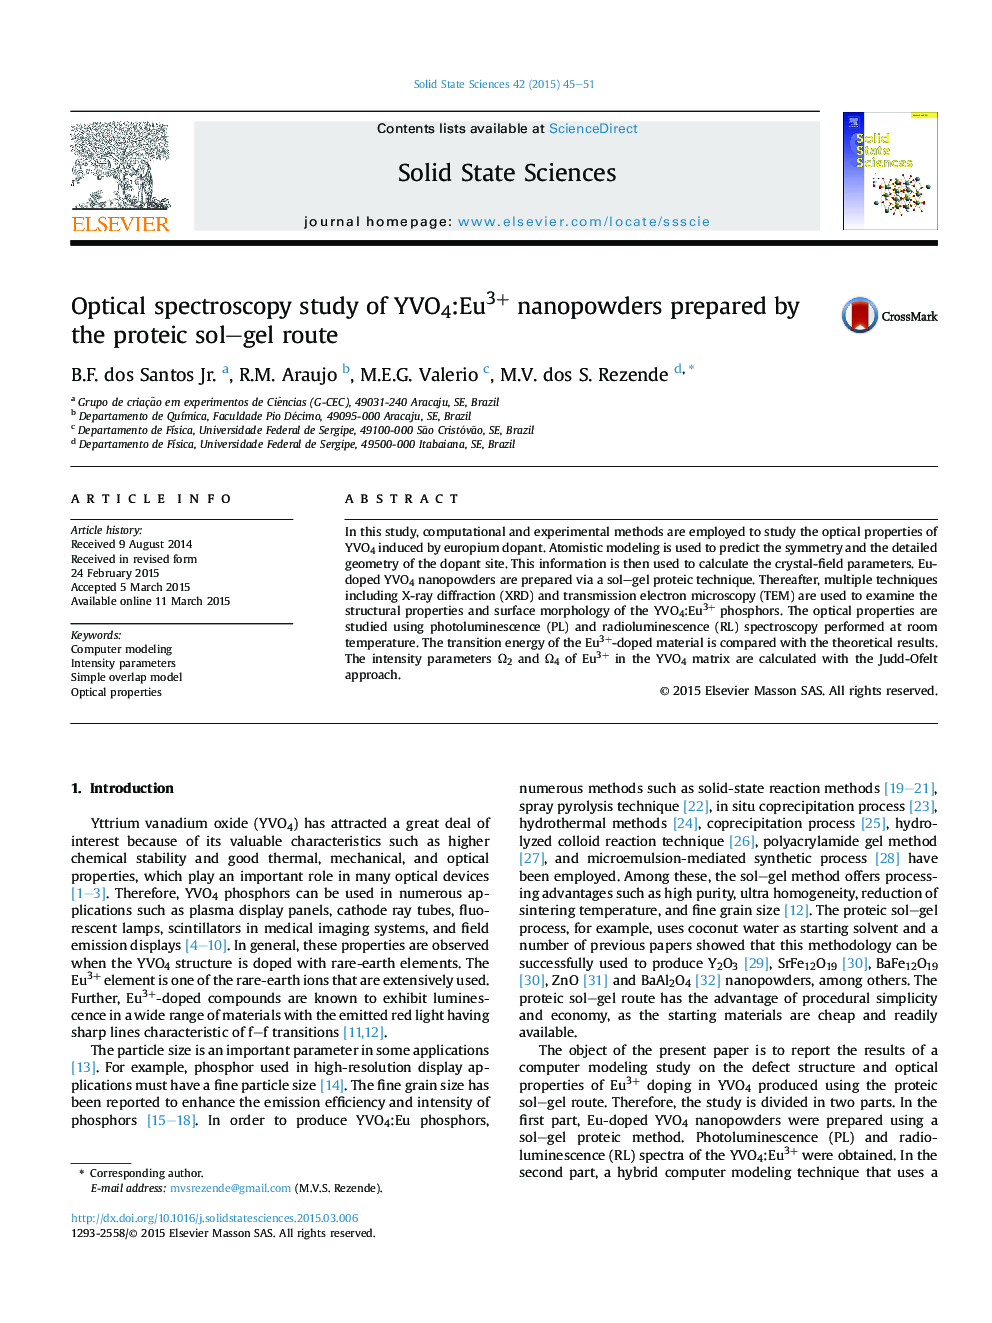 Optical spectroscopy study of YVO4:Eu3+ nanopowders prepared by the proteic sol–gel route